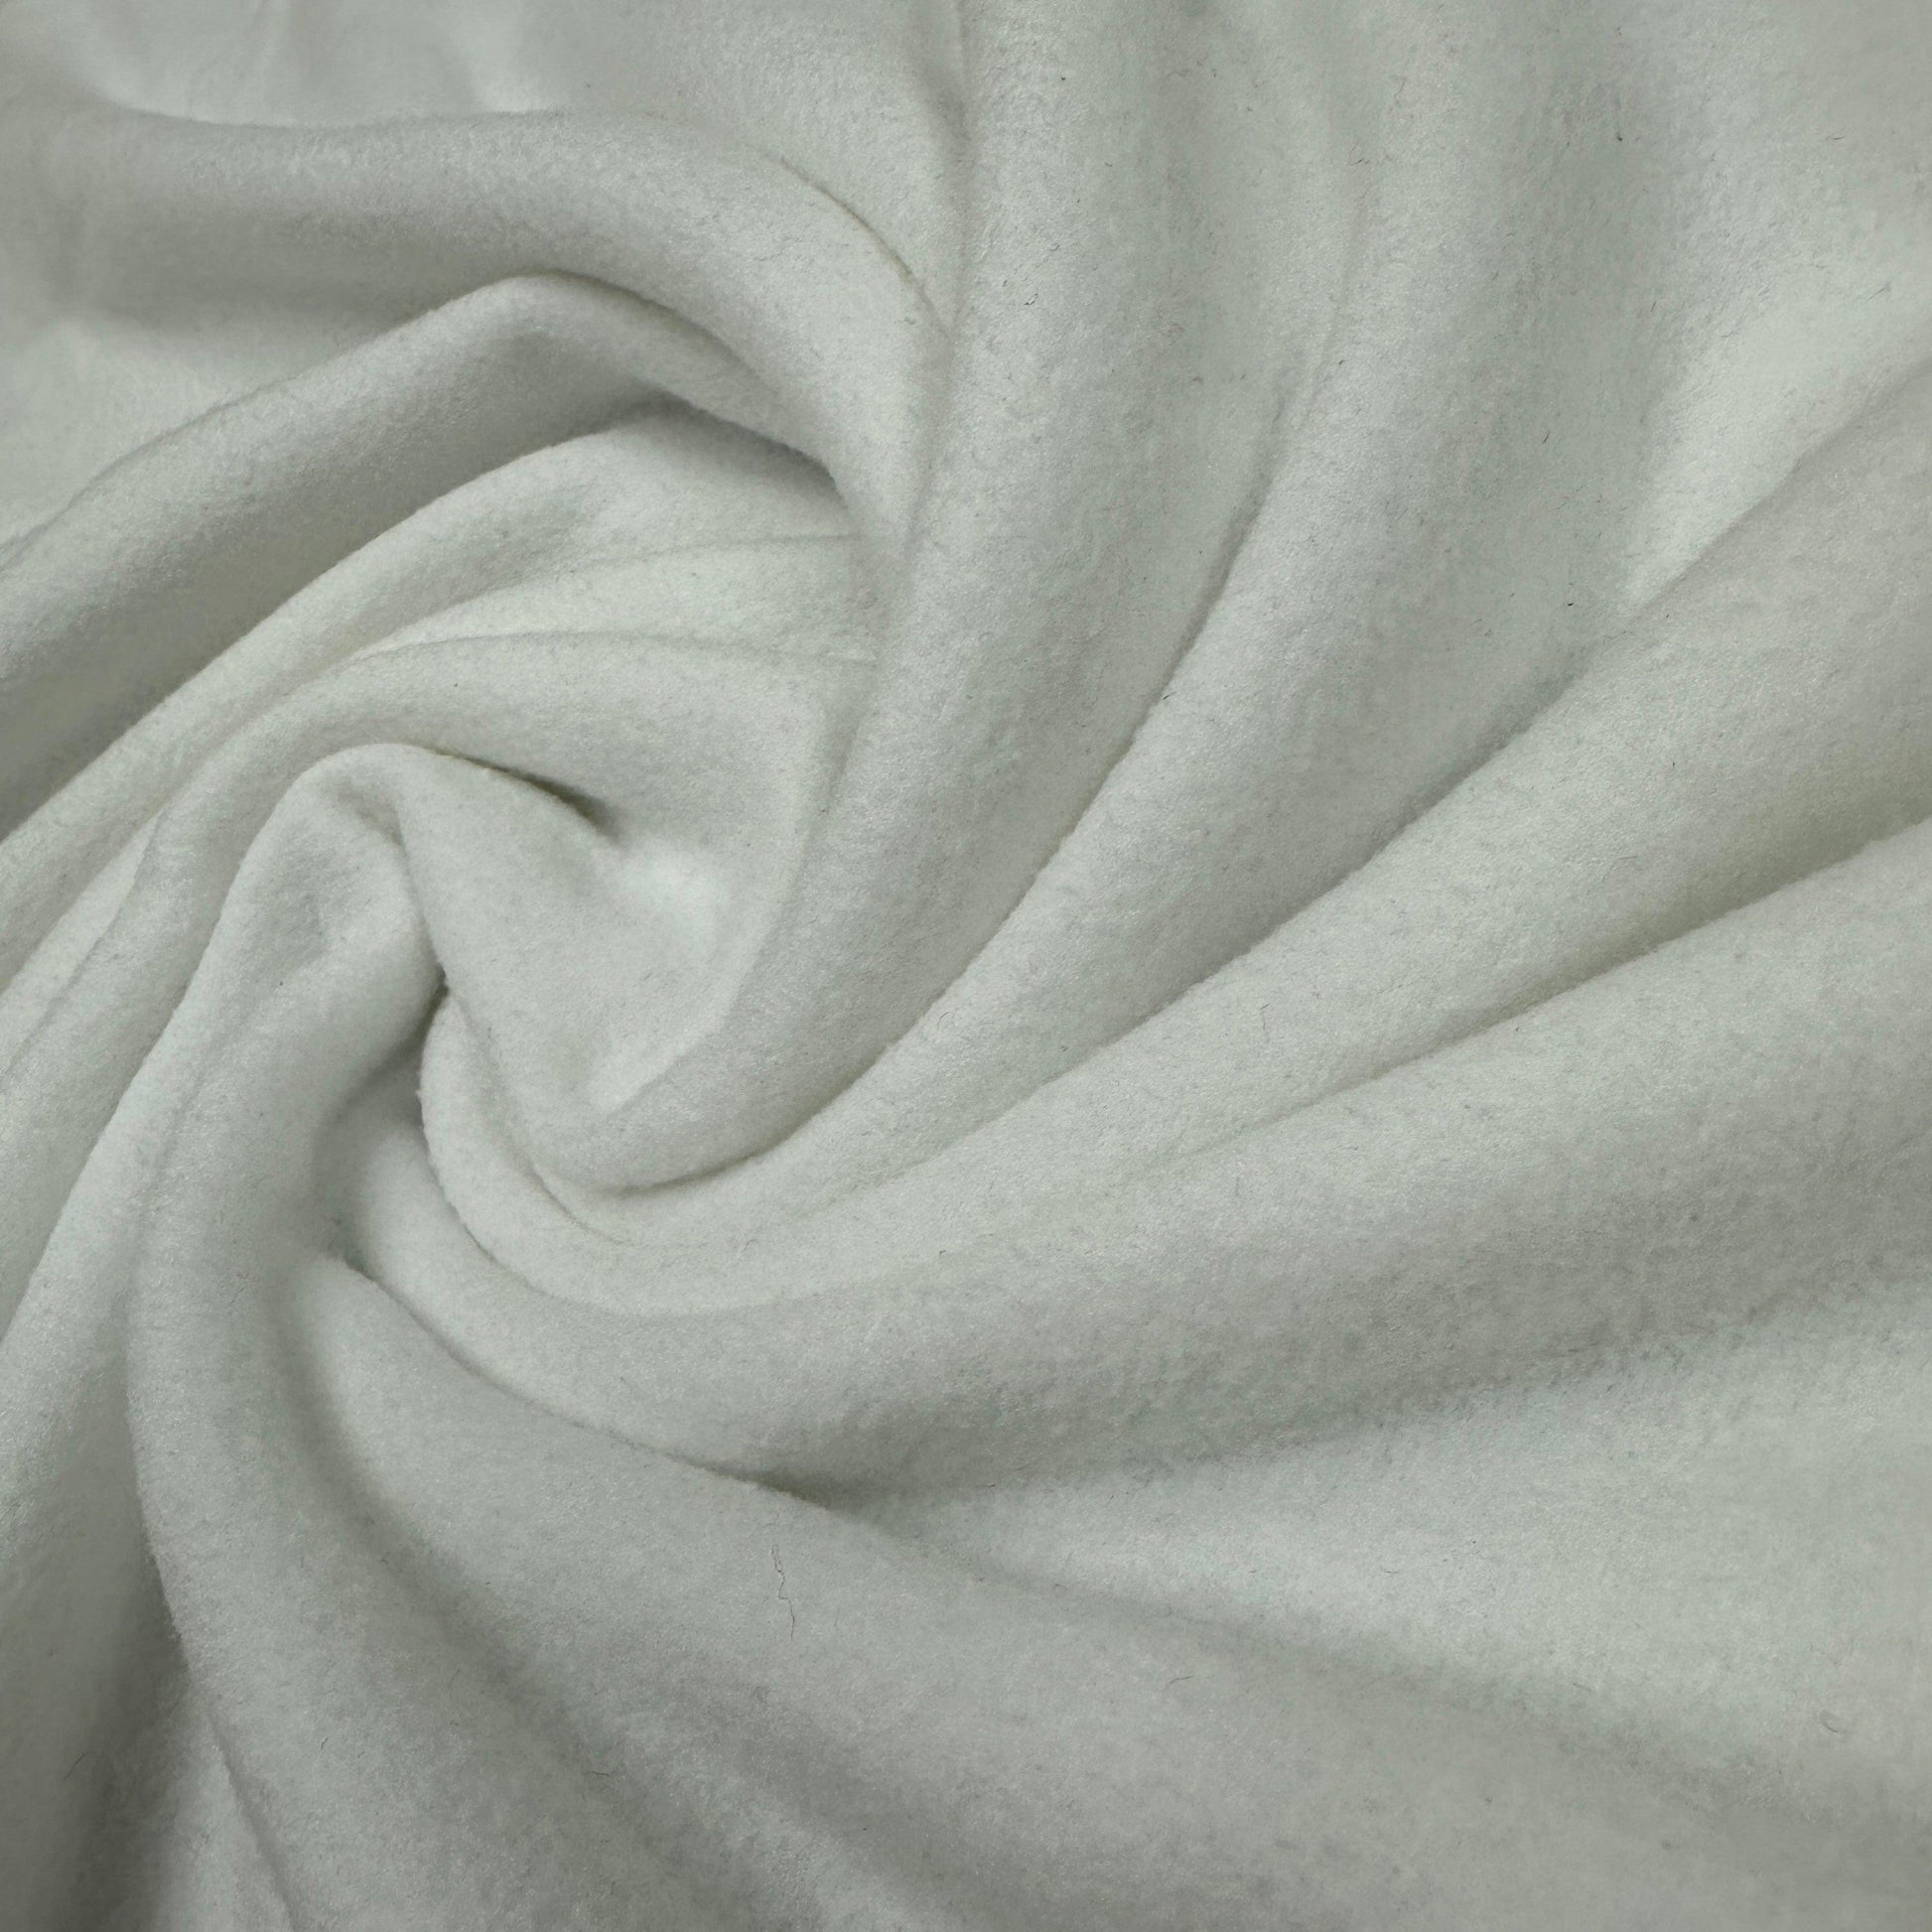 White Microfleece Fabric - 180 GSM, $8.78 per yard, 15 yards - Nature's Fabrics